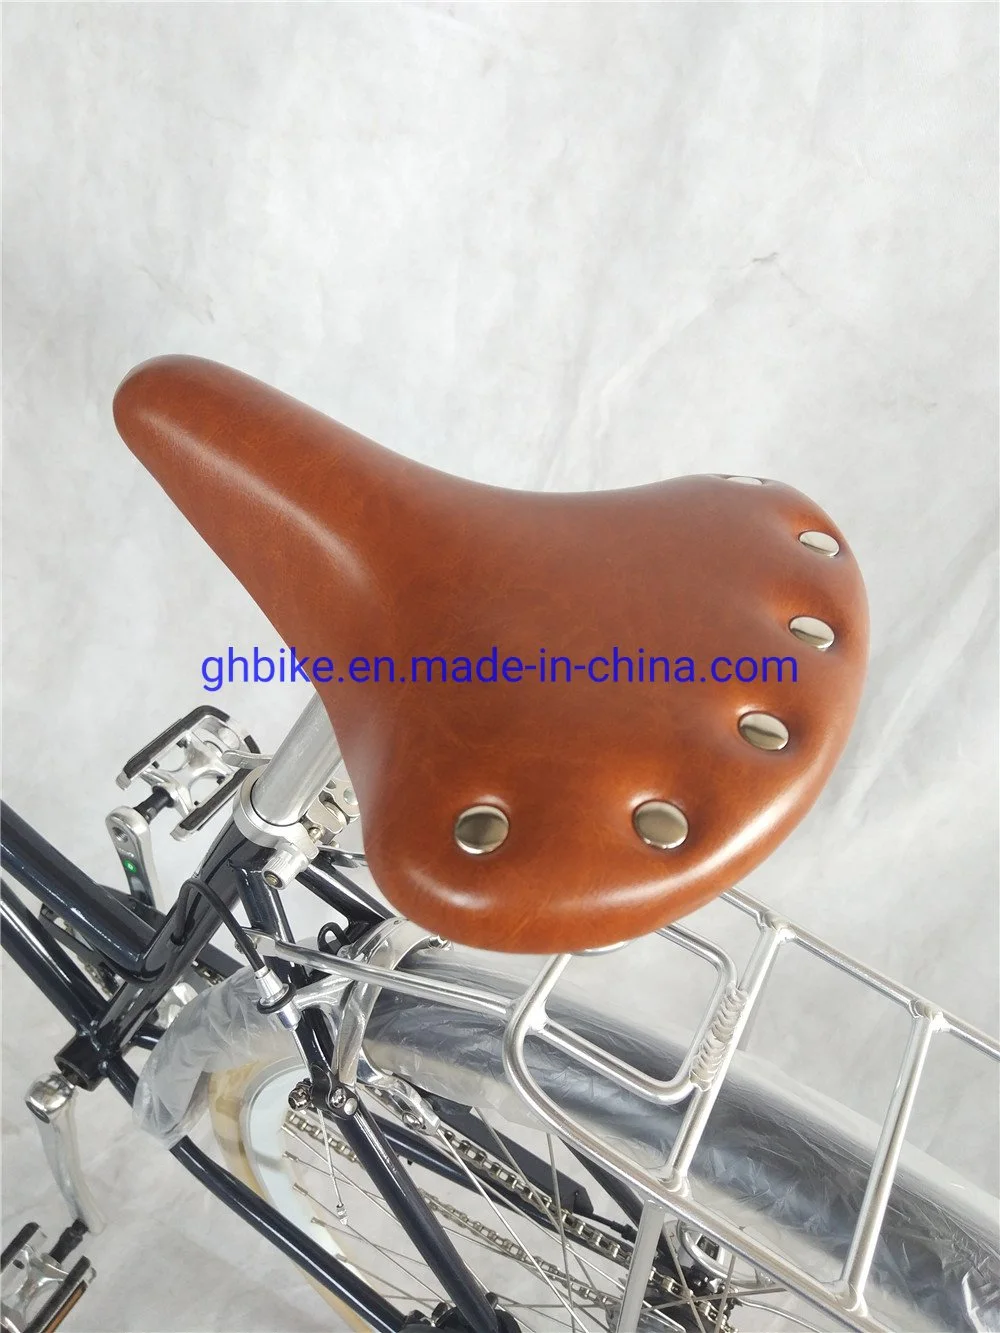 China Factory New Popular Nexus 3 Gear Vintage Lady City Cruiser Bike with Basket